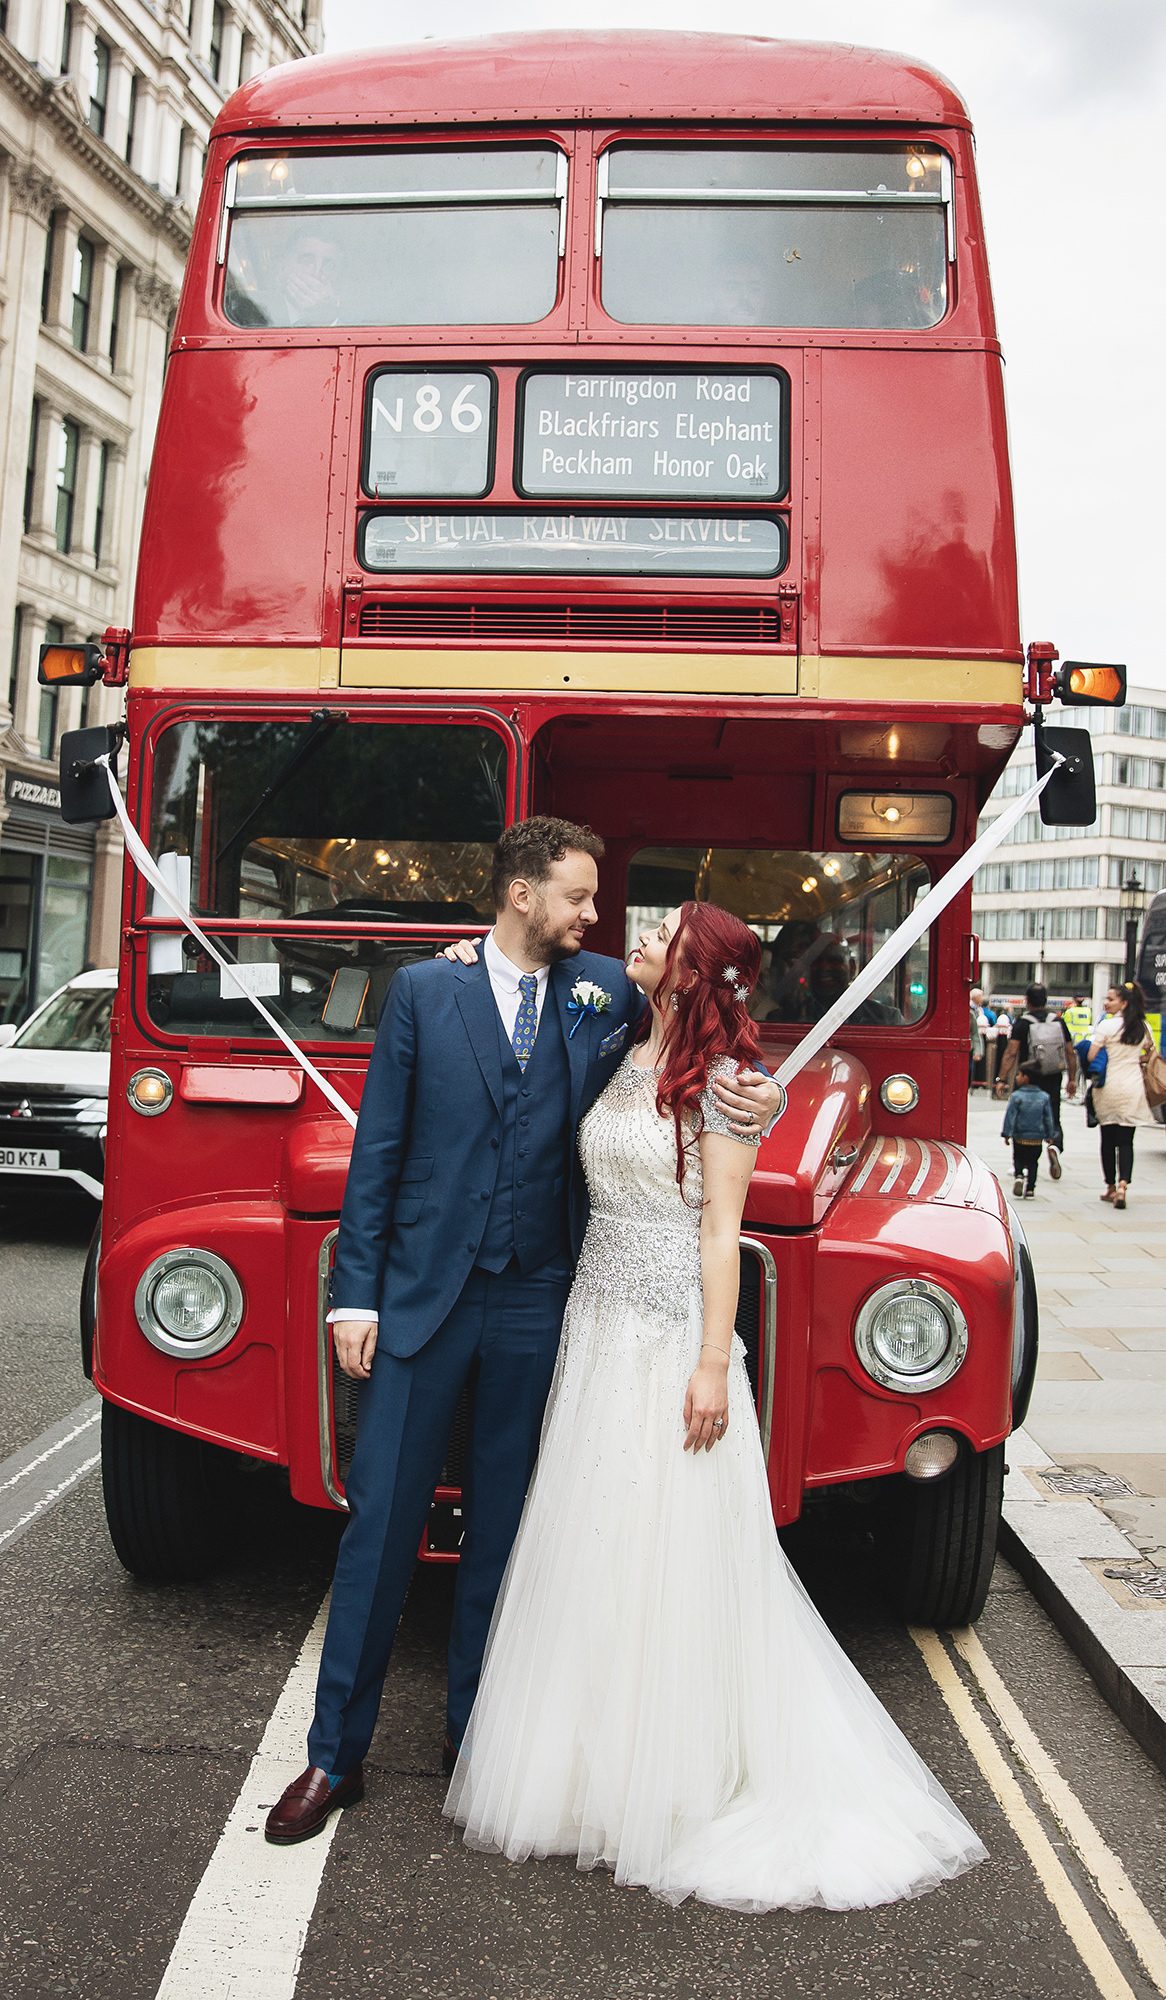 Islington wedding couple by London routemaster bus